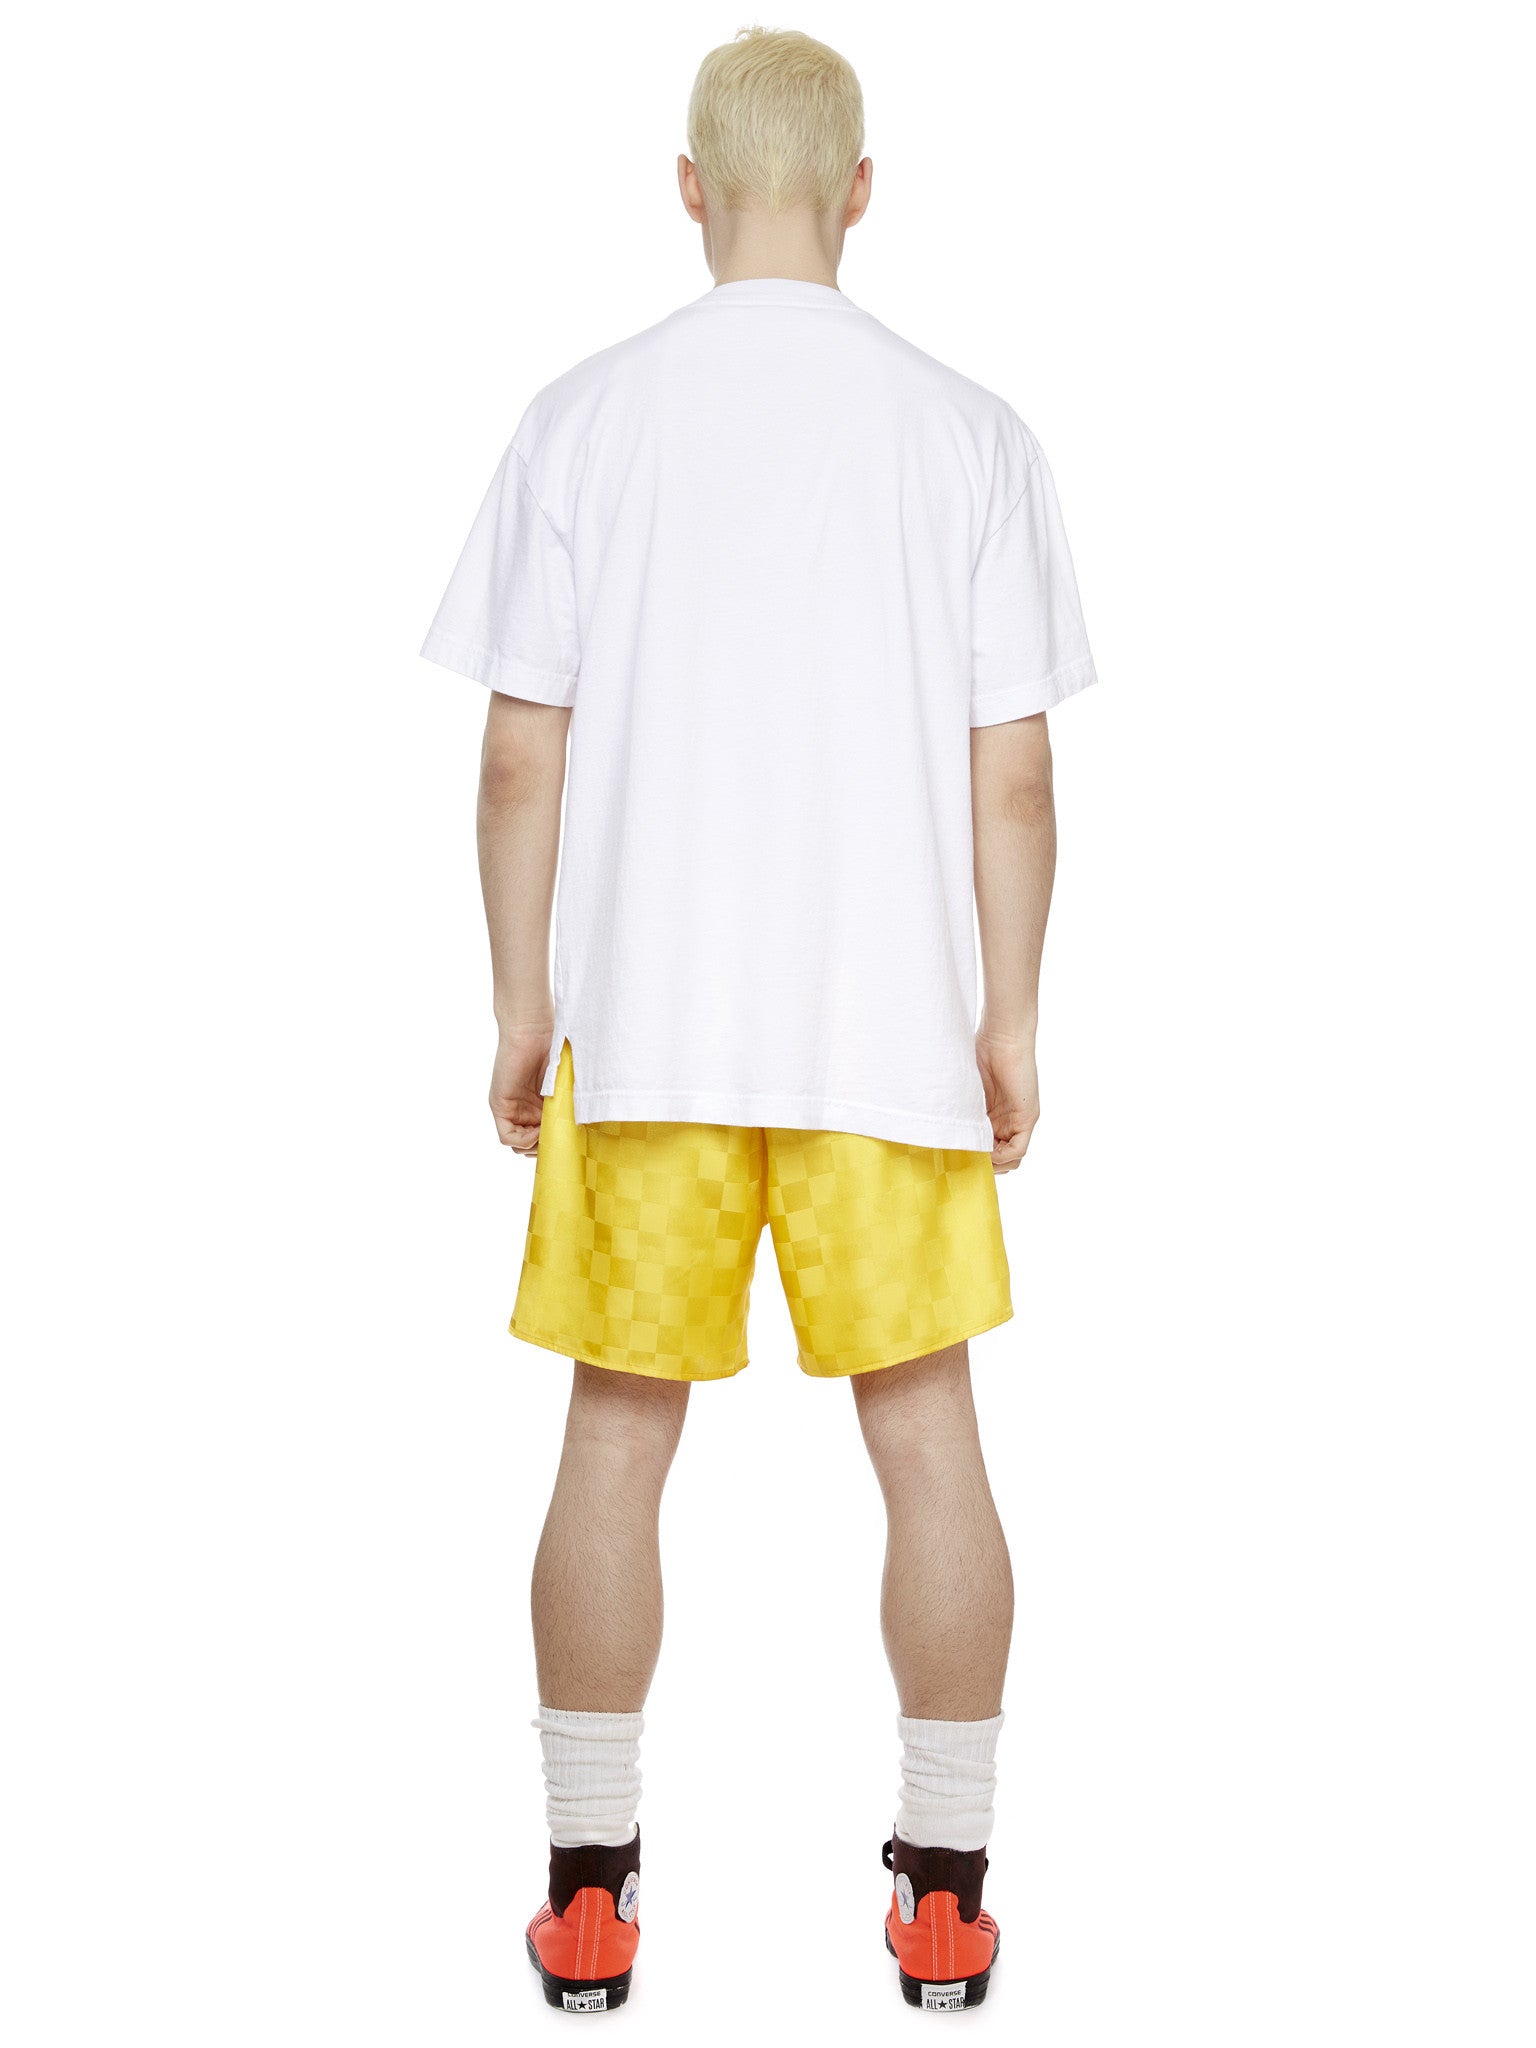 Soccer Short in Yellow